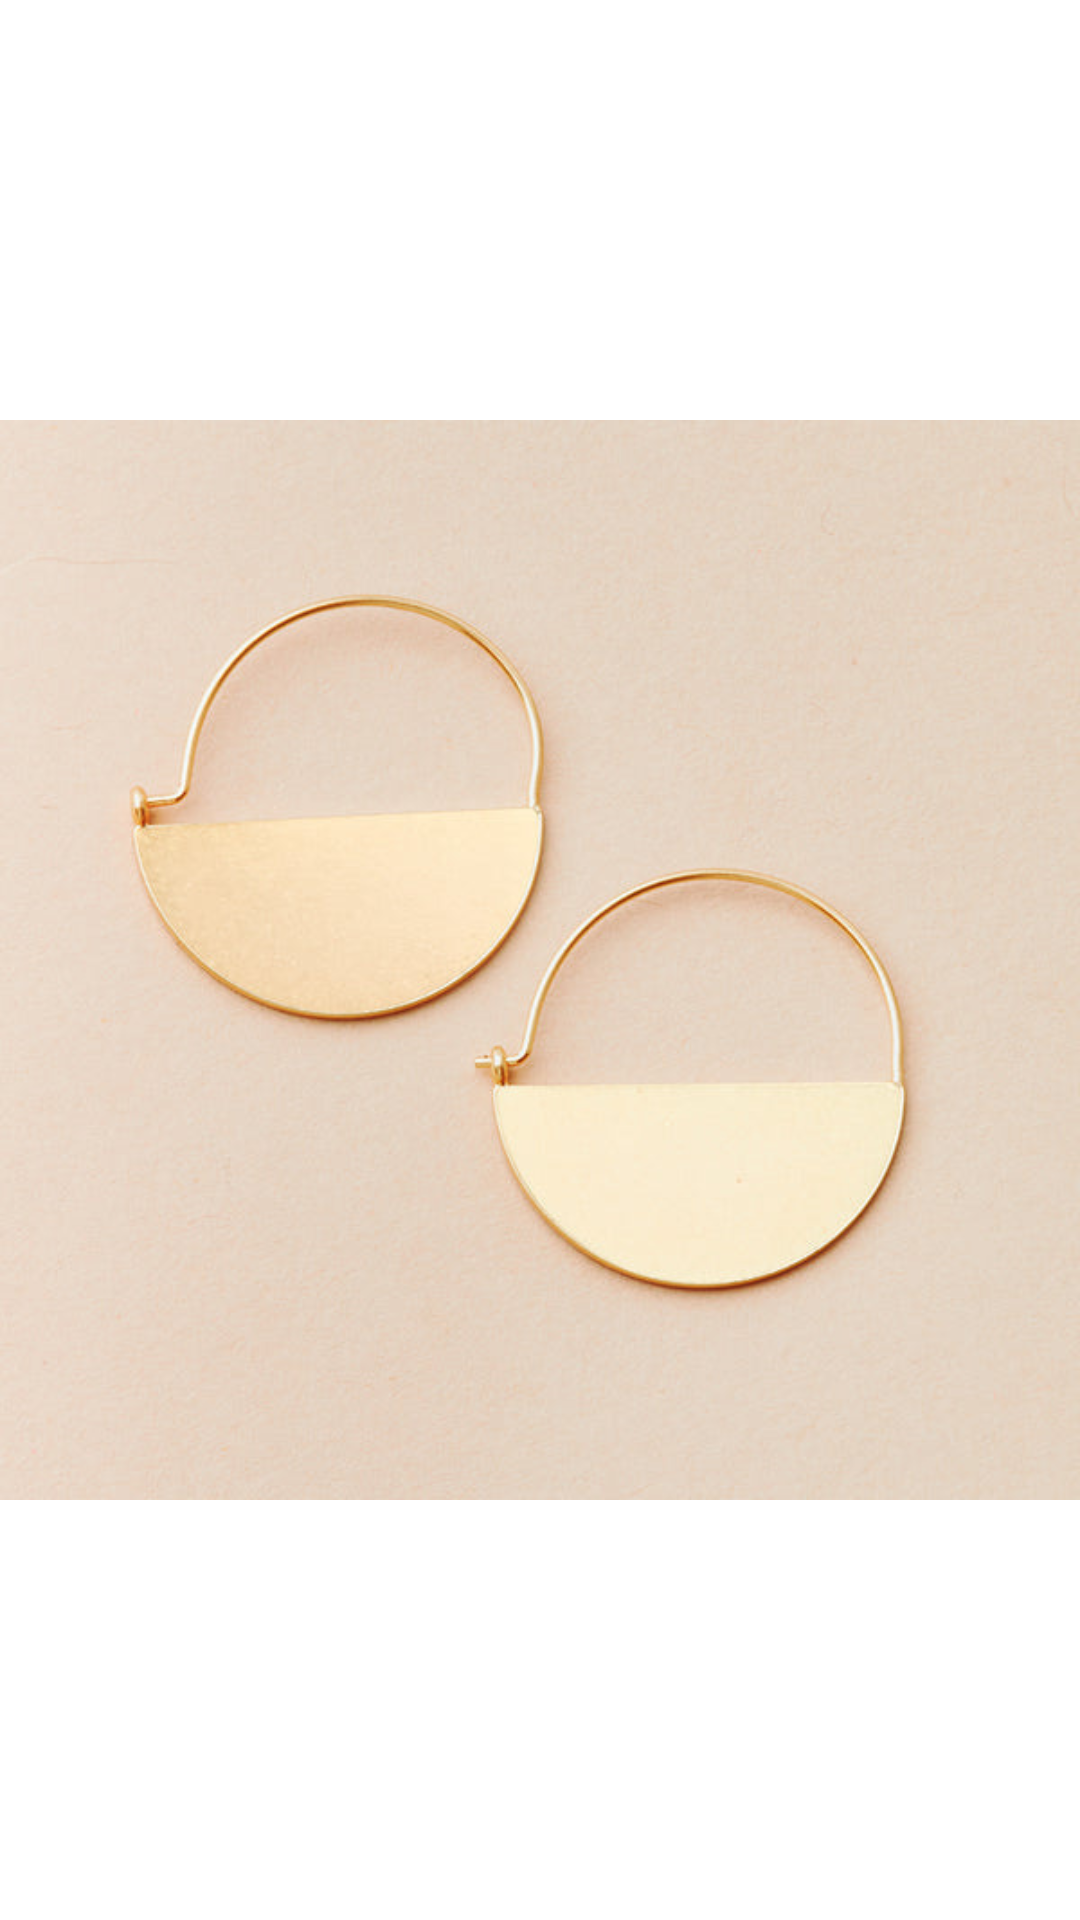 Refined Earring Collection - Lunar Hoop/Gold Vermeil